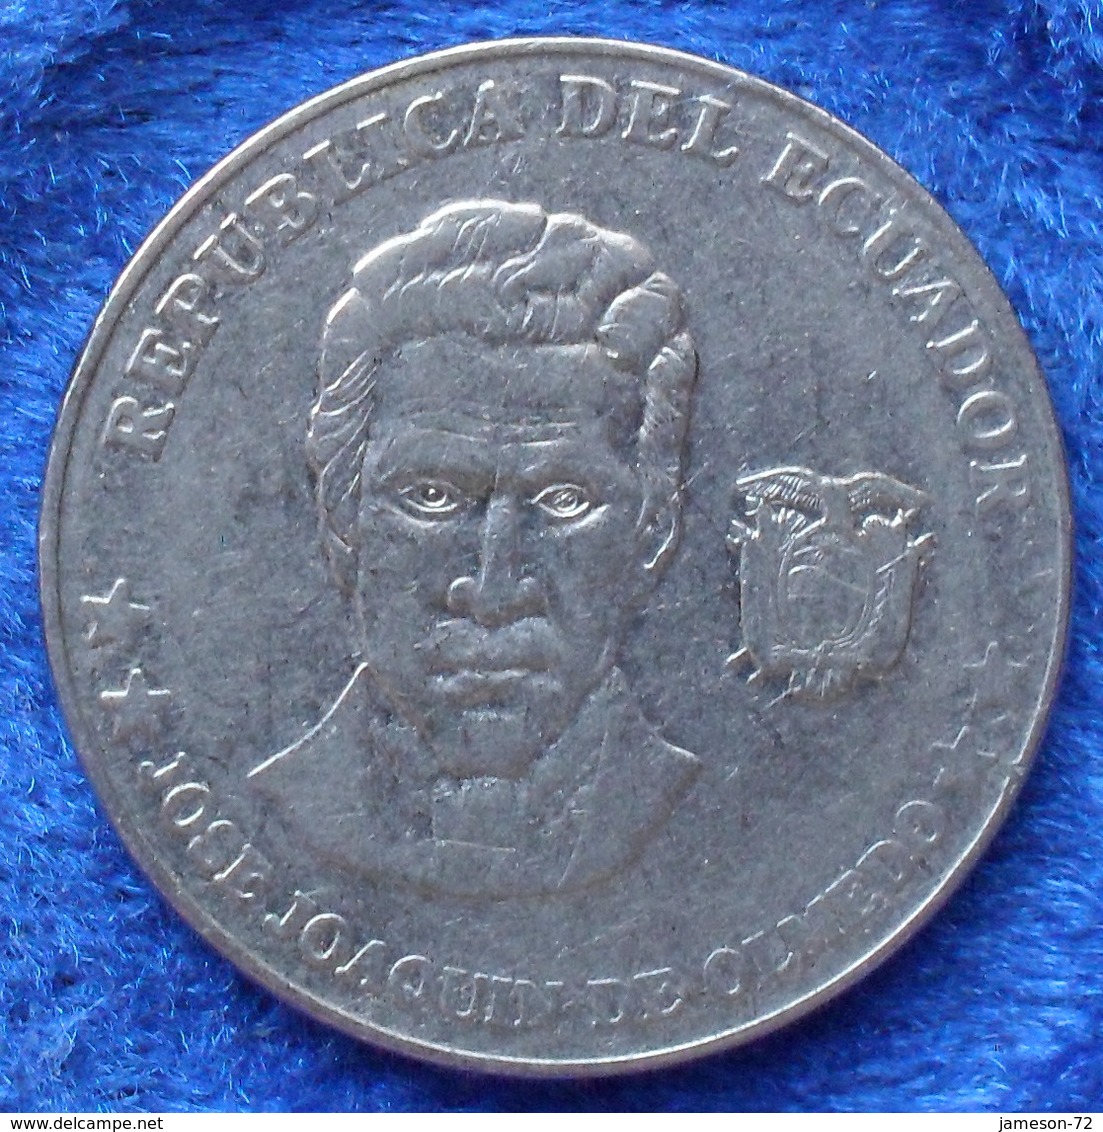 ECUADOR - 25 Centavos 2000 "Olmedo" KM# 107 Reform Coinage (2000) America Coin - Ecuador